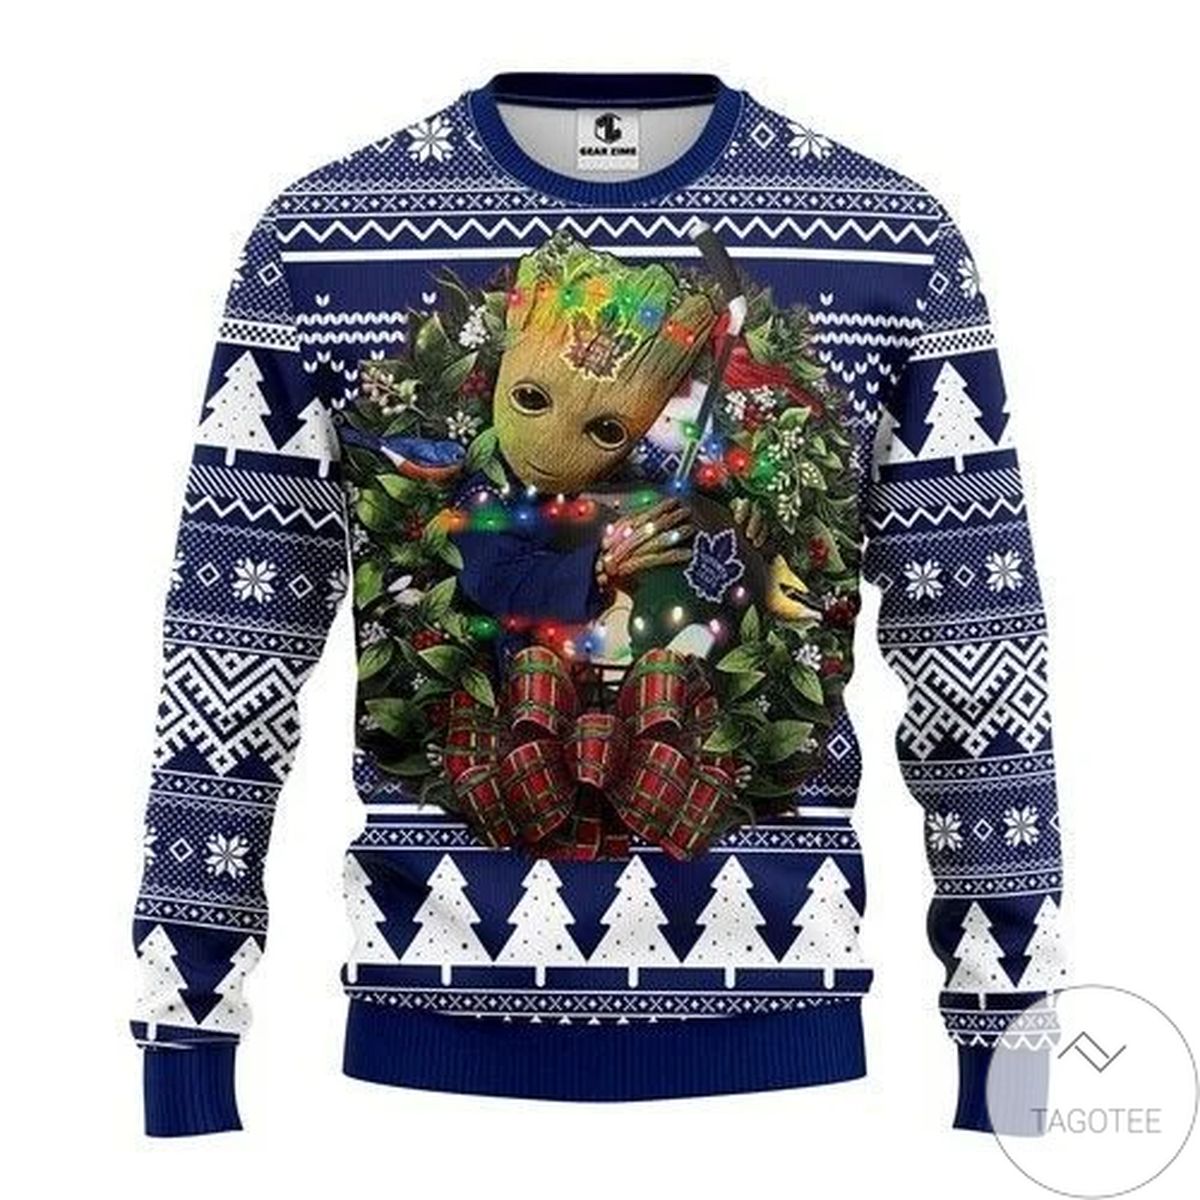 Nhl Toronto Maple Leafs Groot Hug Ugly Christmas Sweater